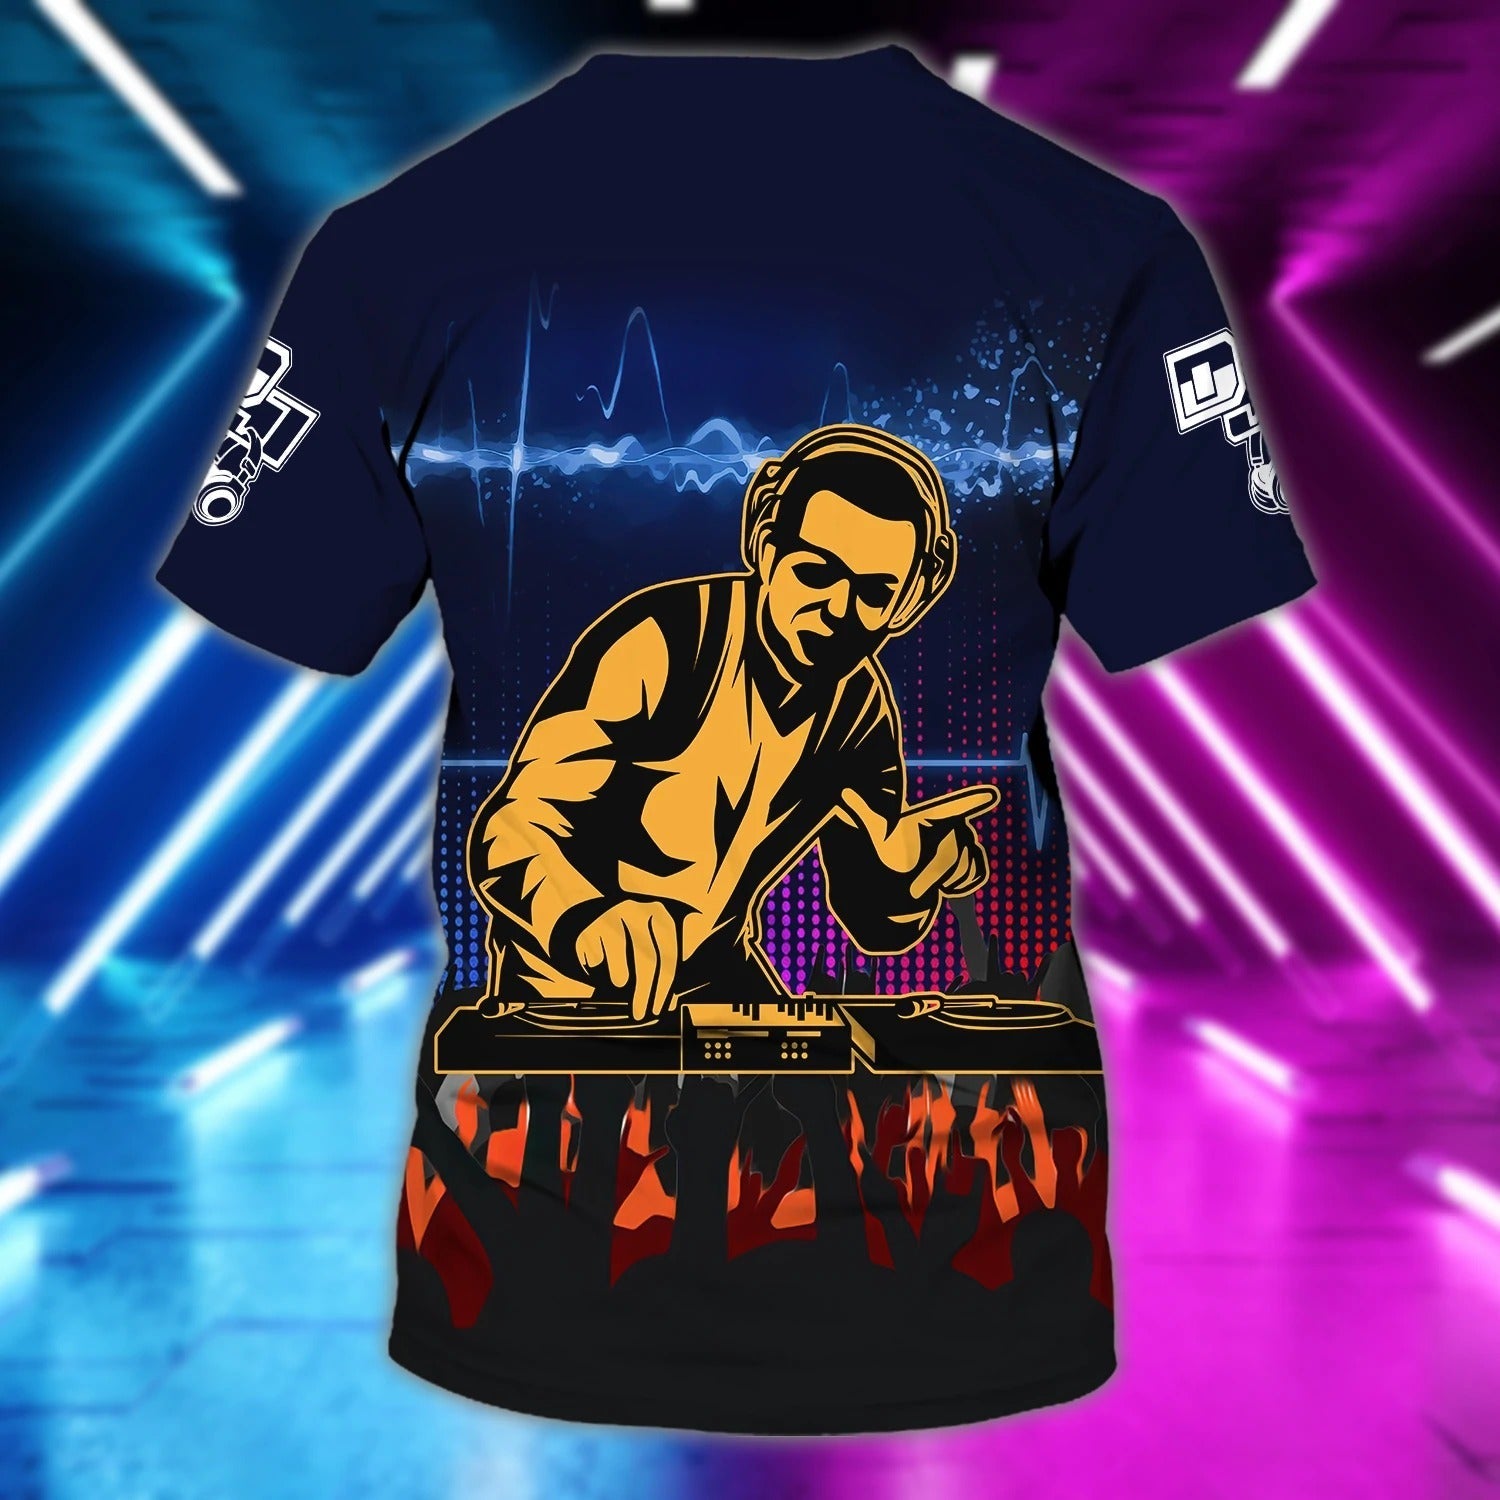 Customized Funny Dj Tee Shirt/ Dj Last Night/ A Dj Saved My Life 3D Tshirt/ Play Deezay Shirt Gift For Music Lover